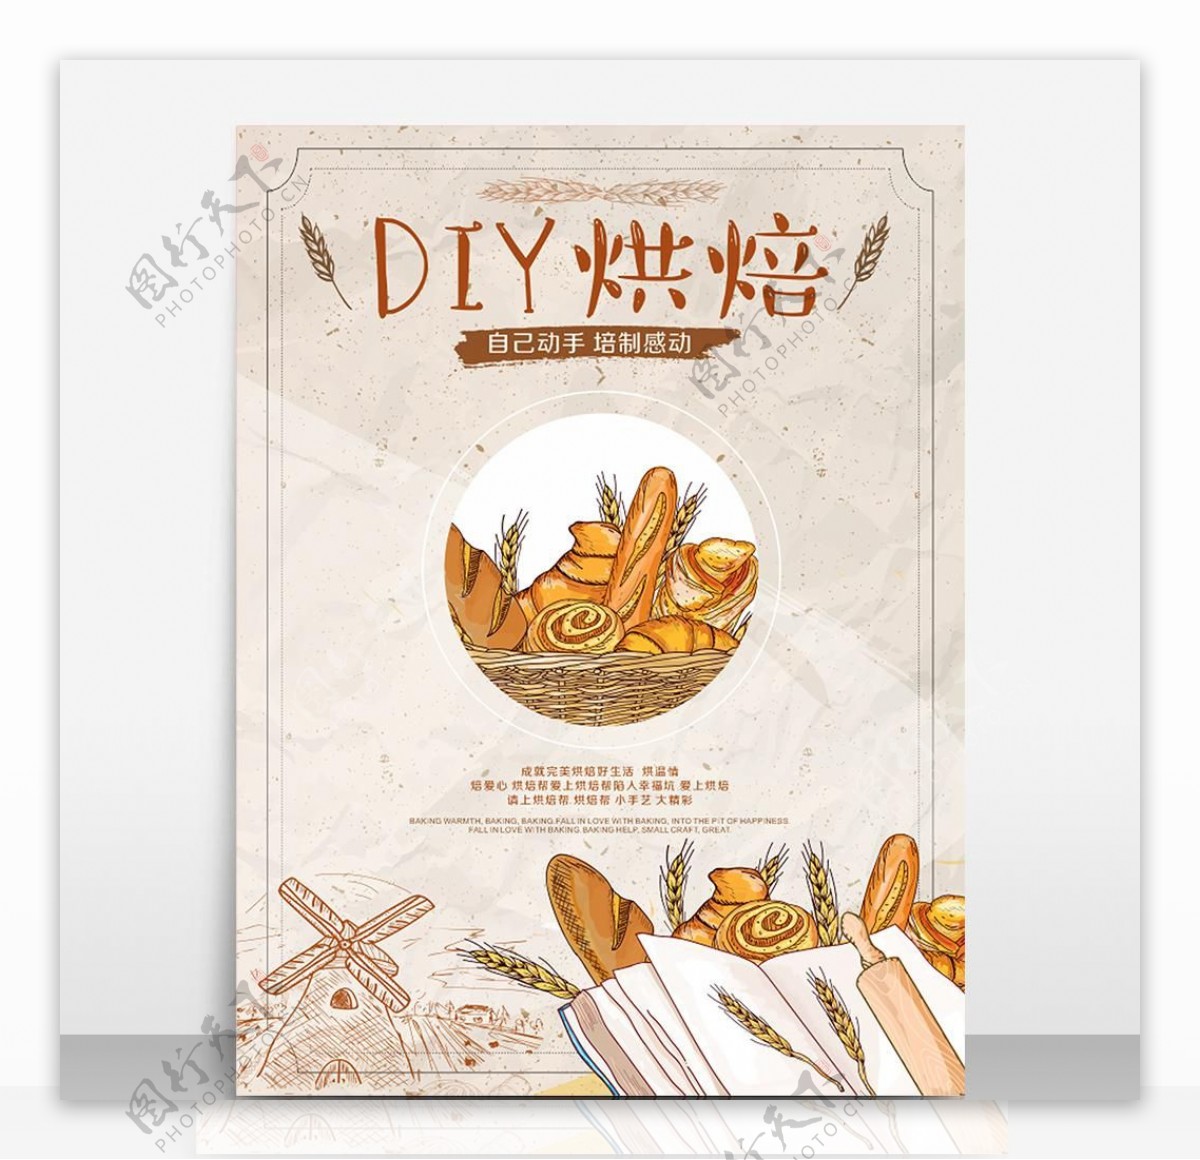 DIY美食面包店宣传海报